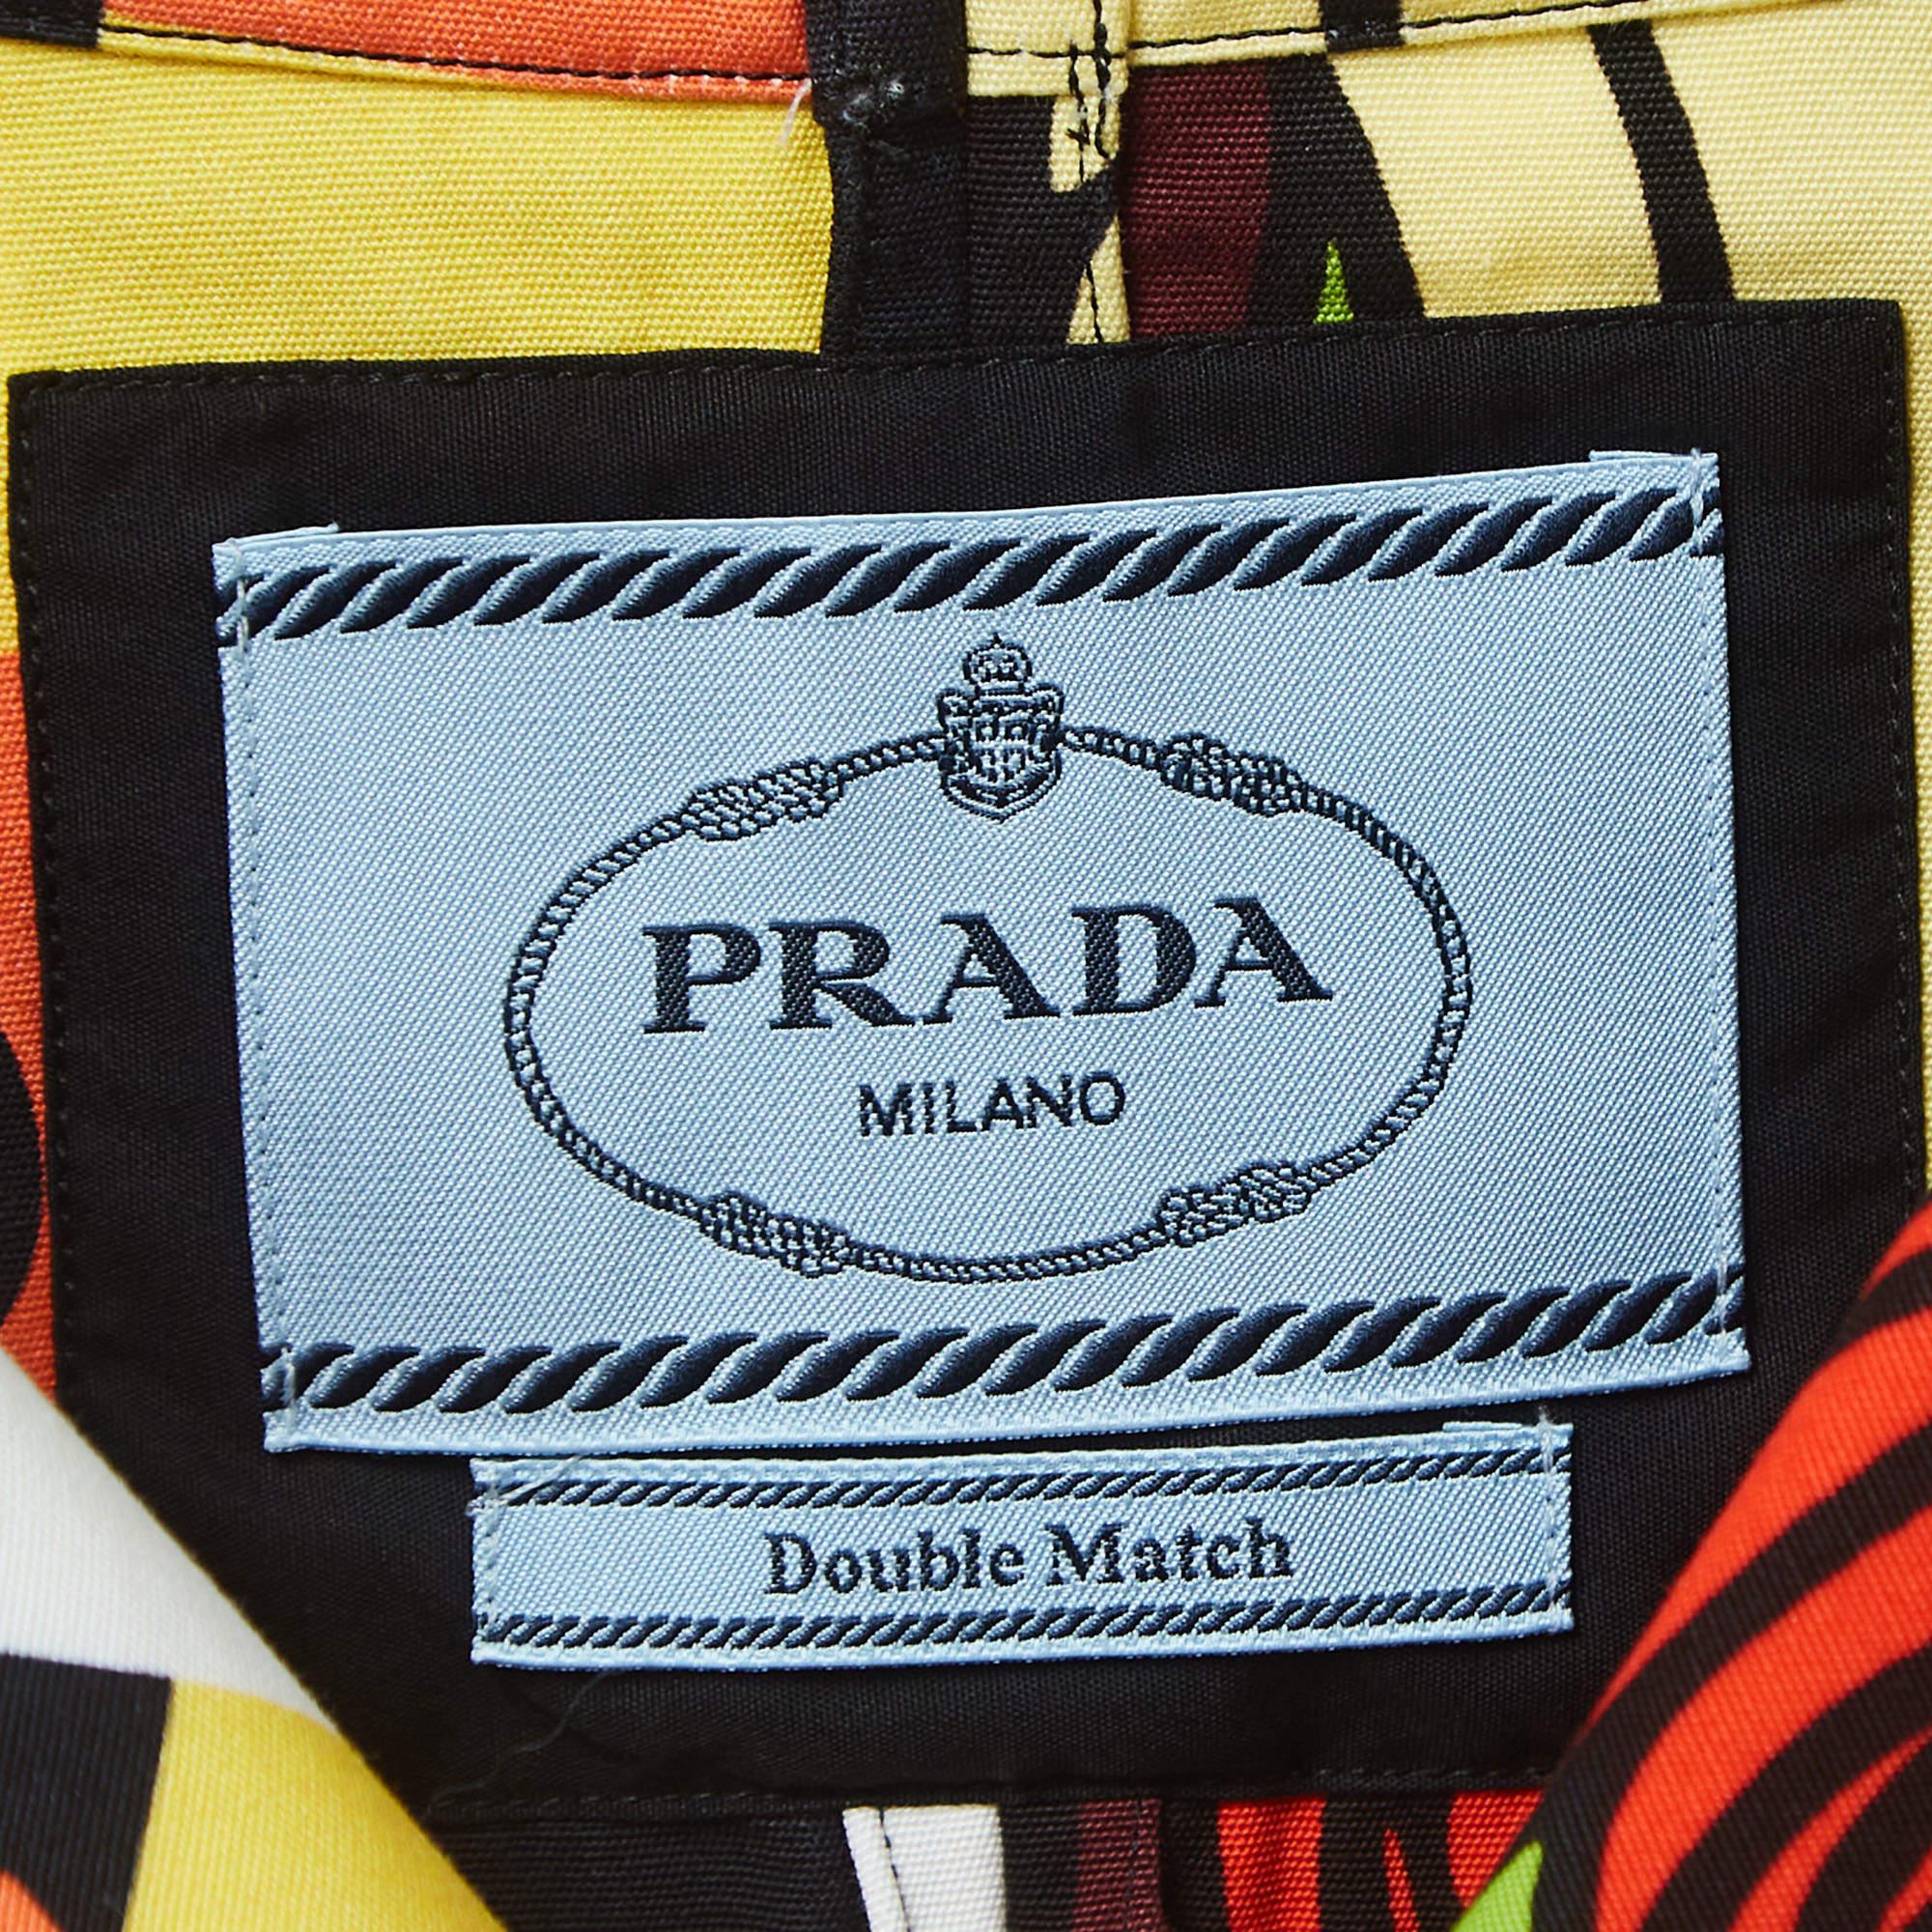 Prada Double Match Multicolor Printed Cotton Short Sleeve Shirt M For Sale 1